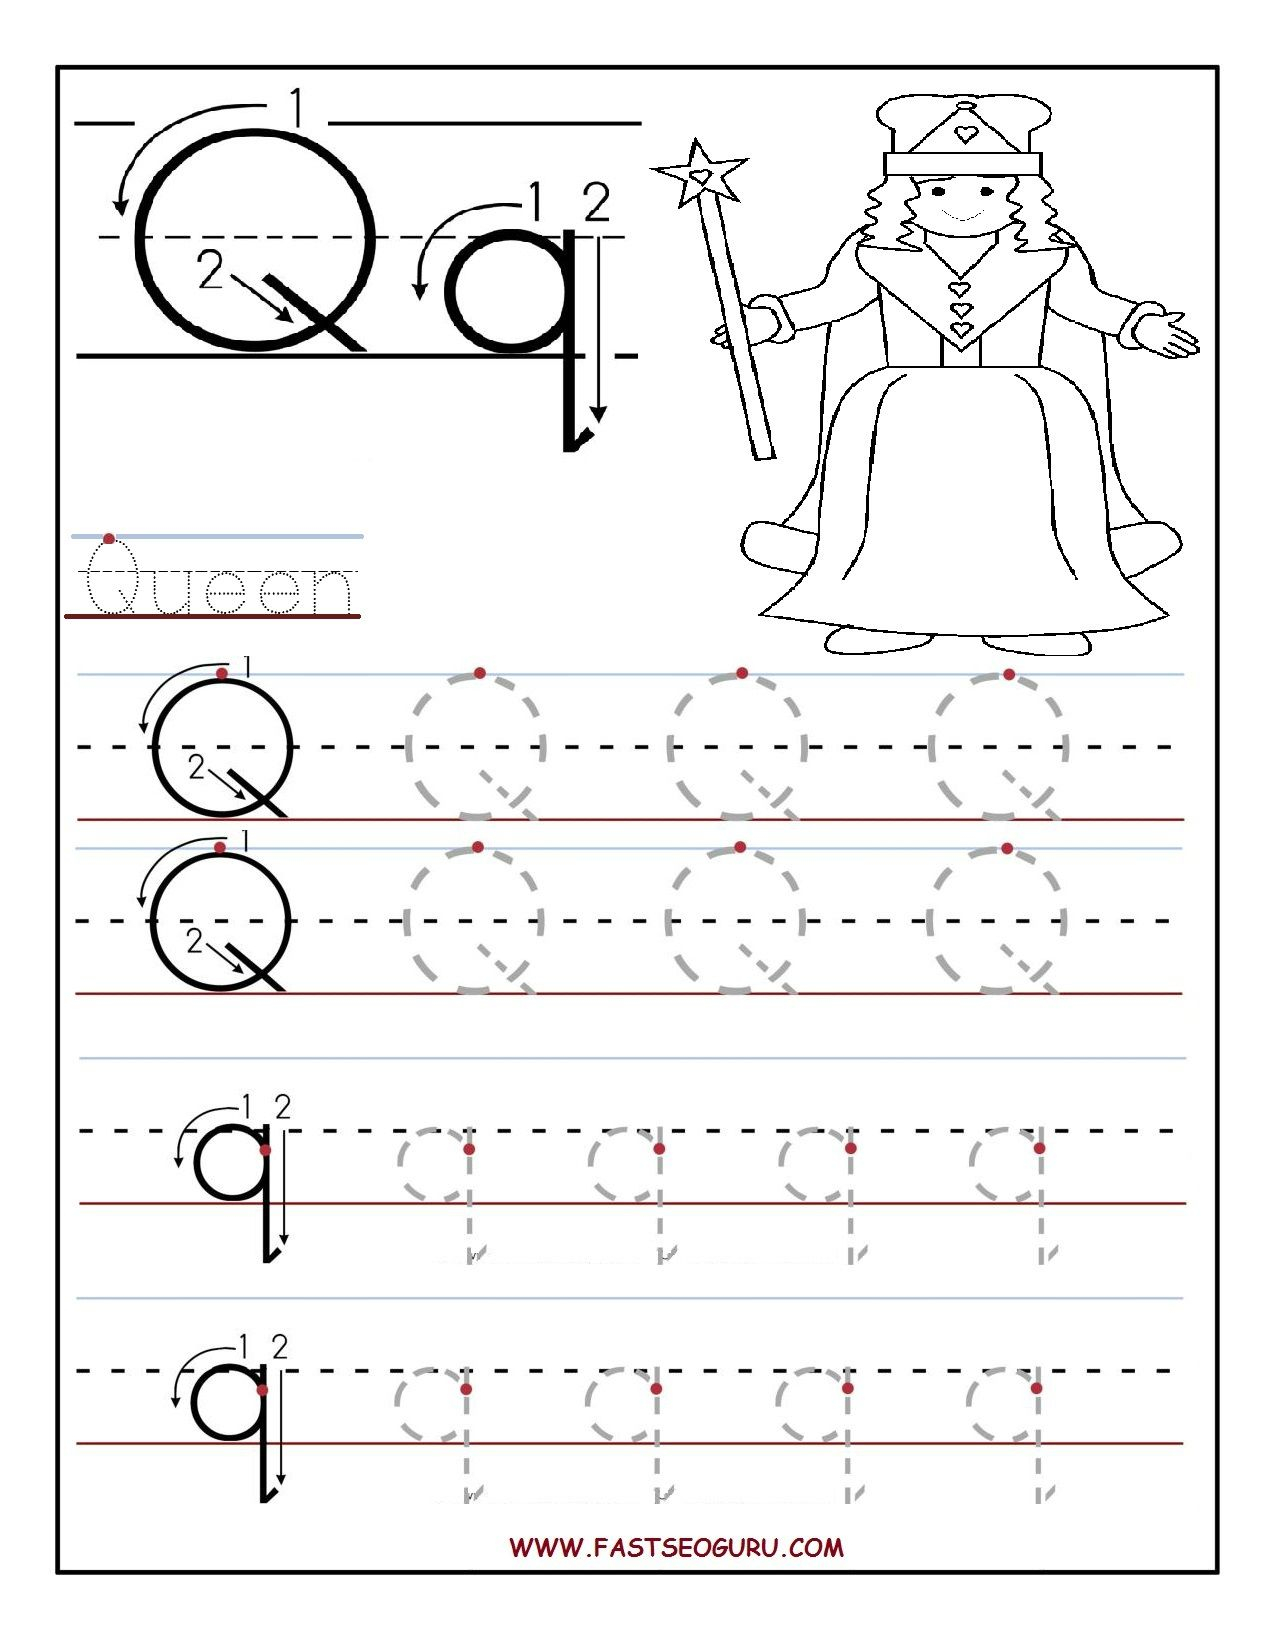 Printable Letter Q Tracing Worksheets For Preschool jpg 